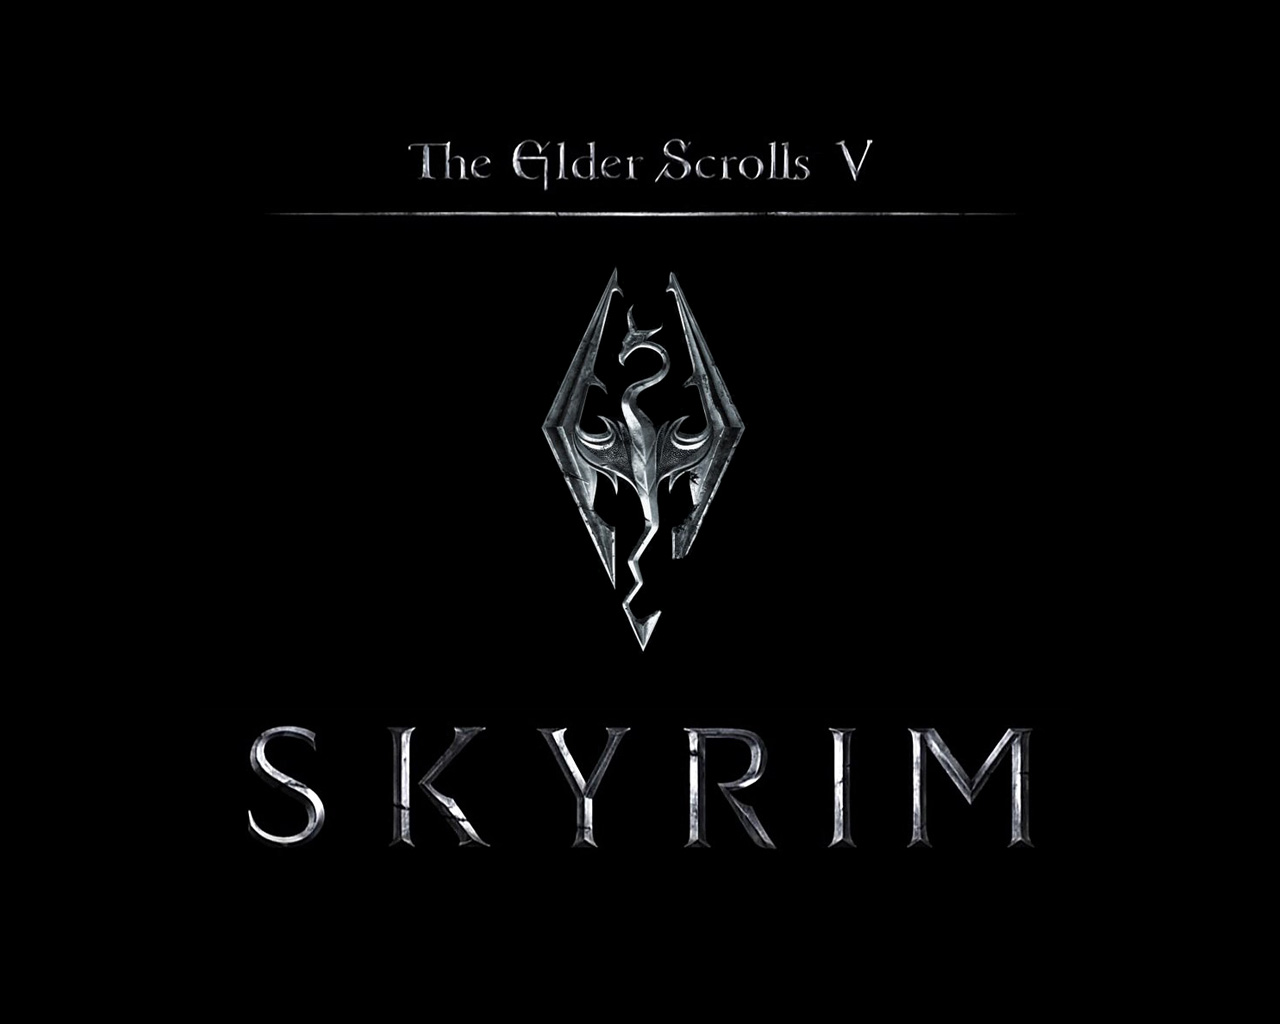 The Elder Scrolls V Skyrim Wallpaper in 1280x1024